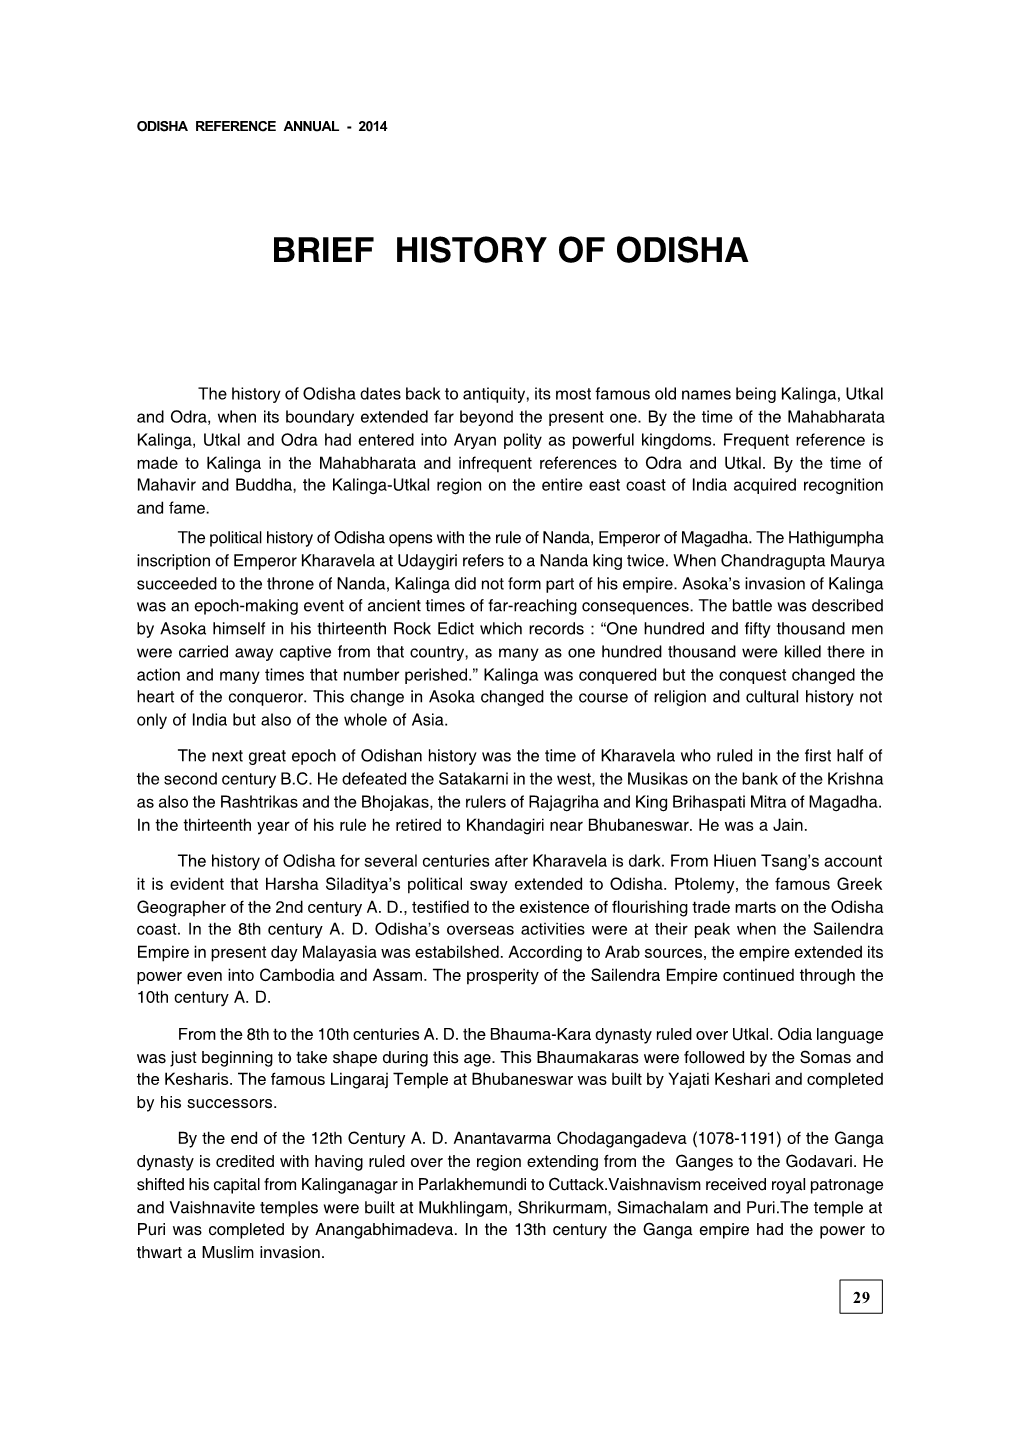 Brief History of Odisha